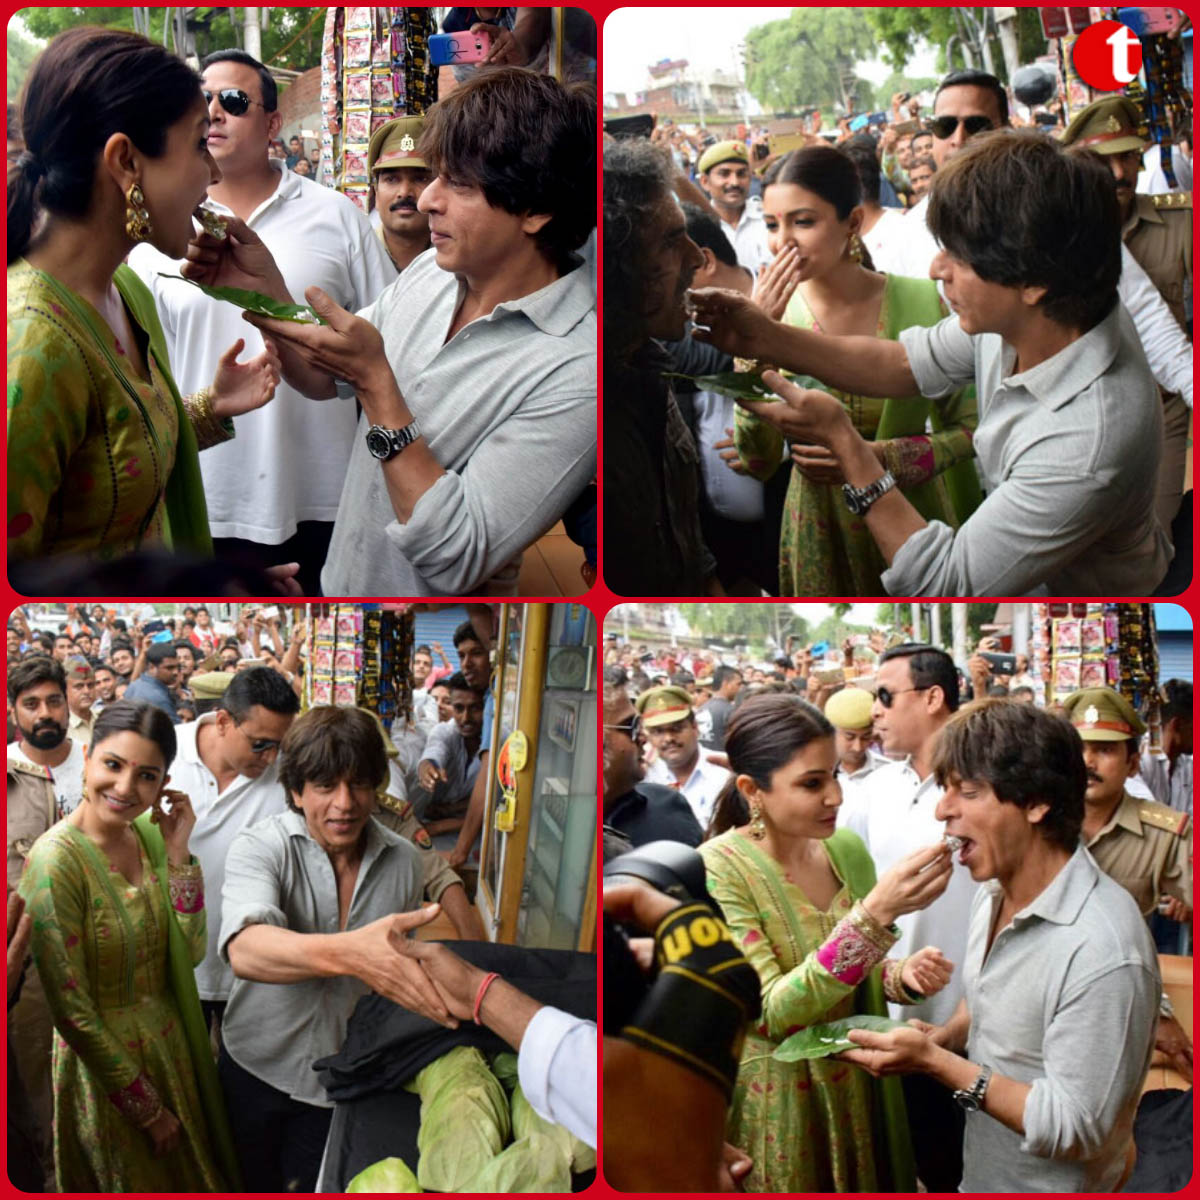 SRK, Anushka relish 'paan' in Varanasi